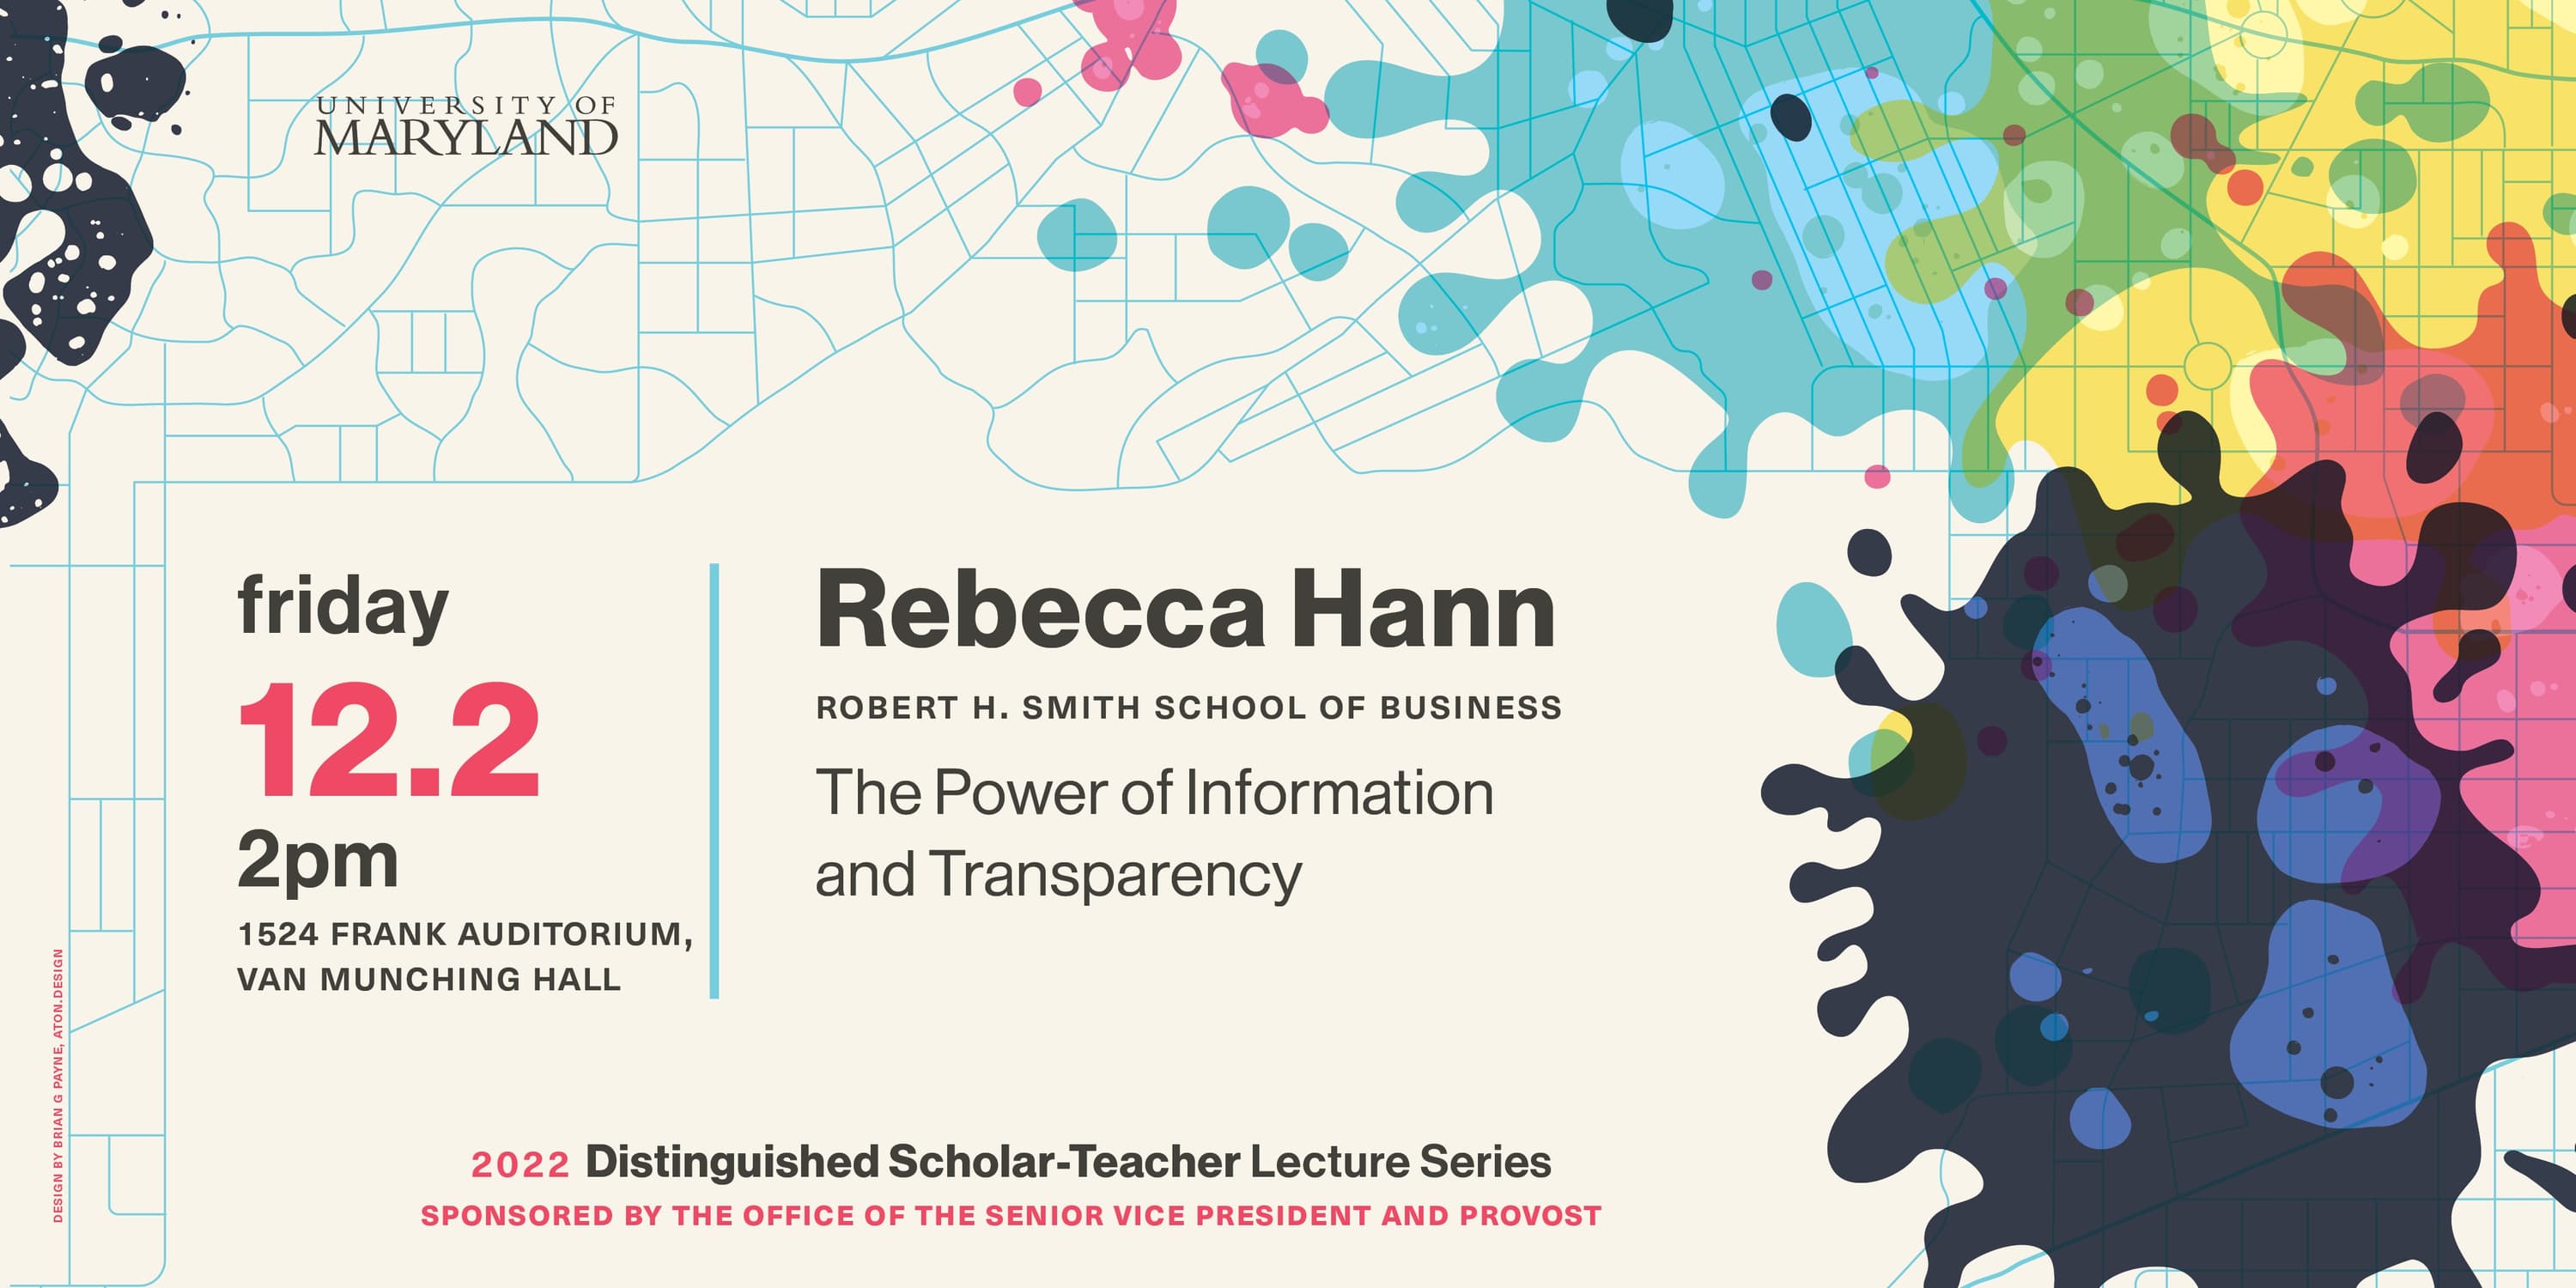 Dr. Rebecca Hann's Distinguished Scholar-Teacher Poster